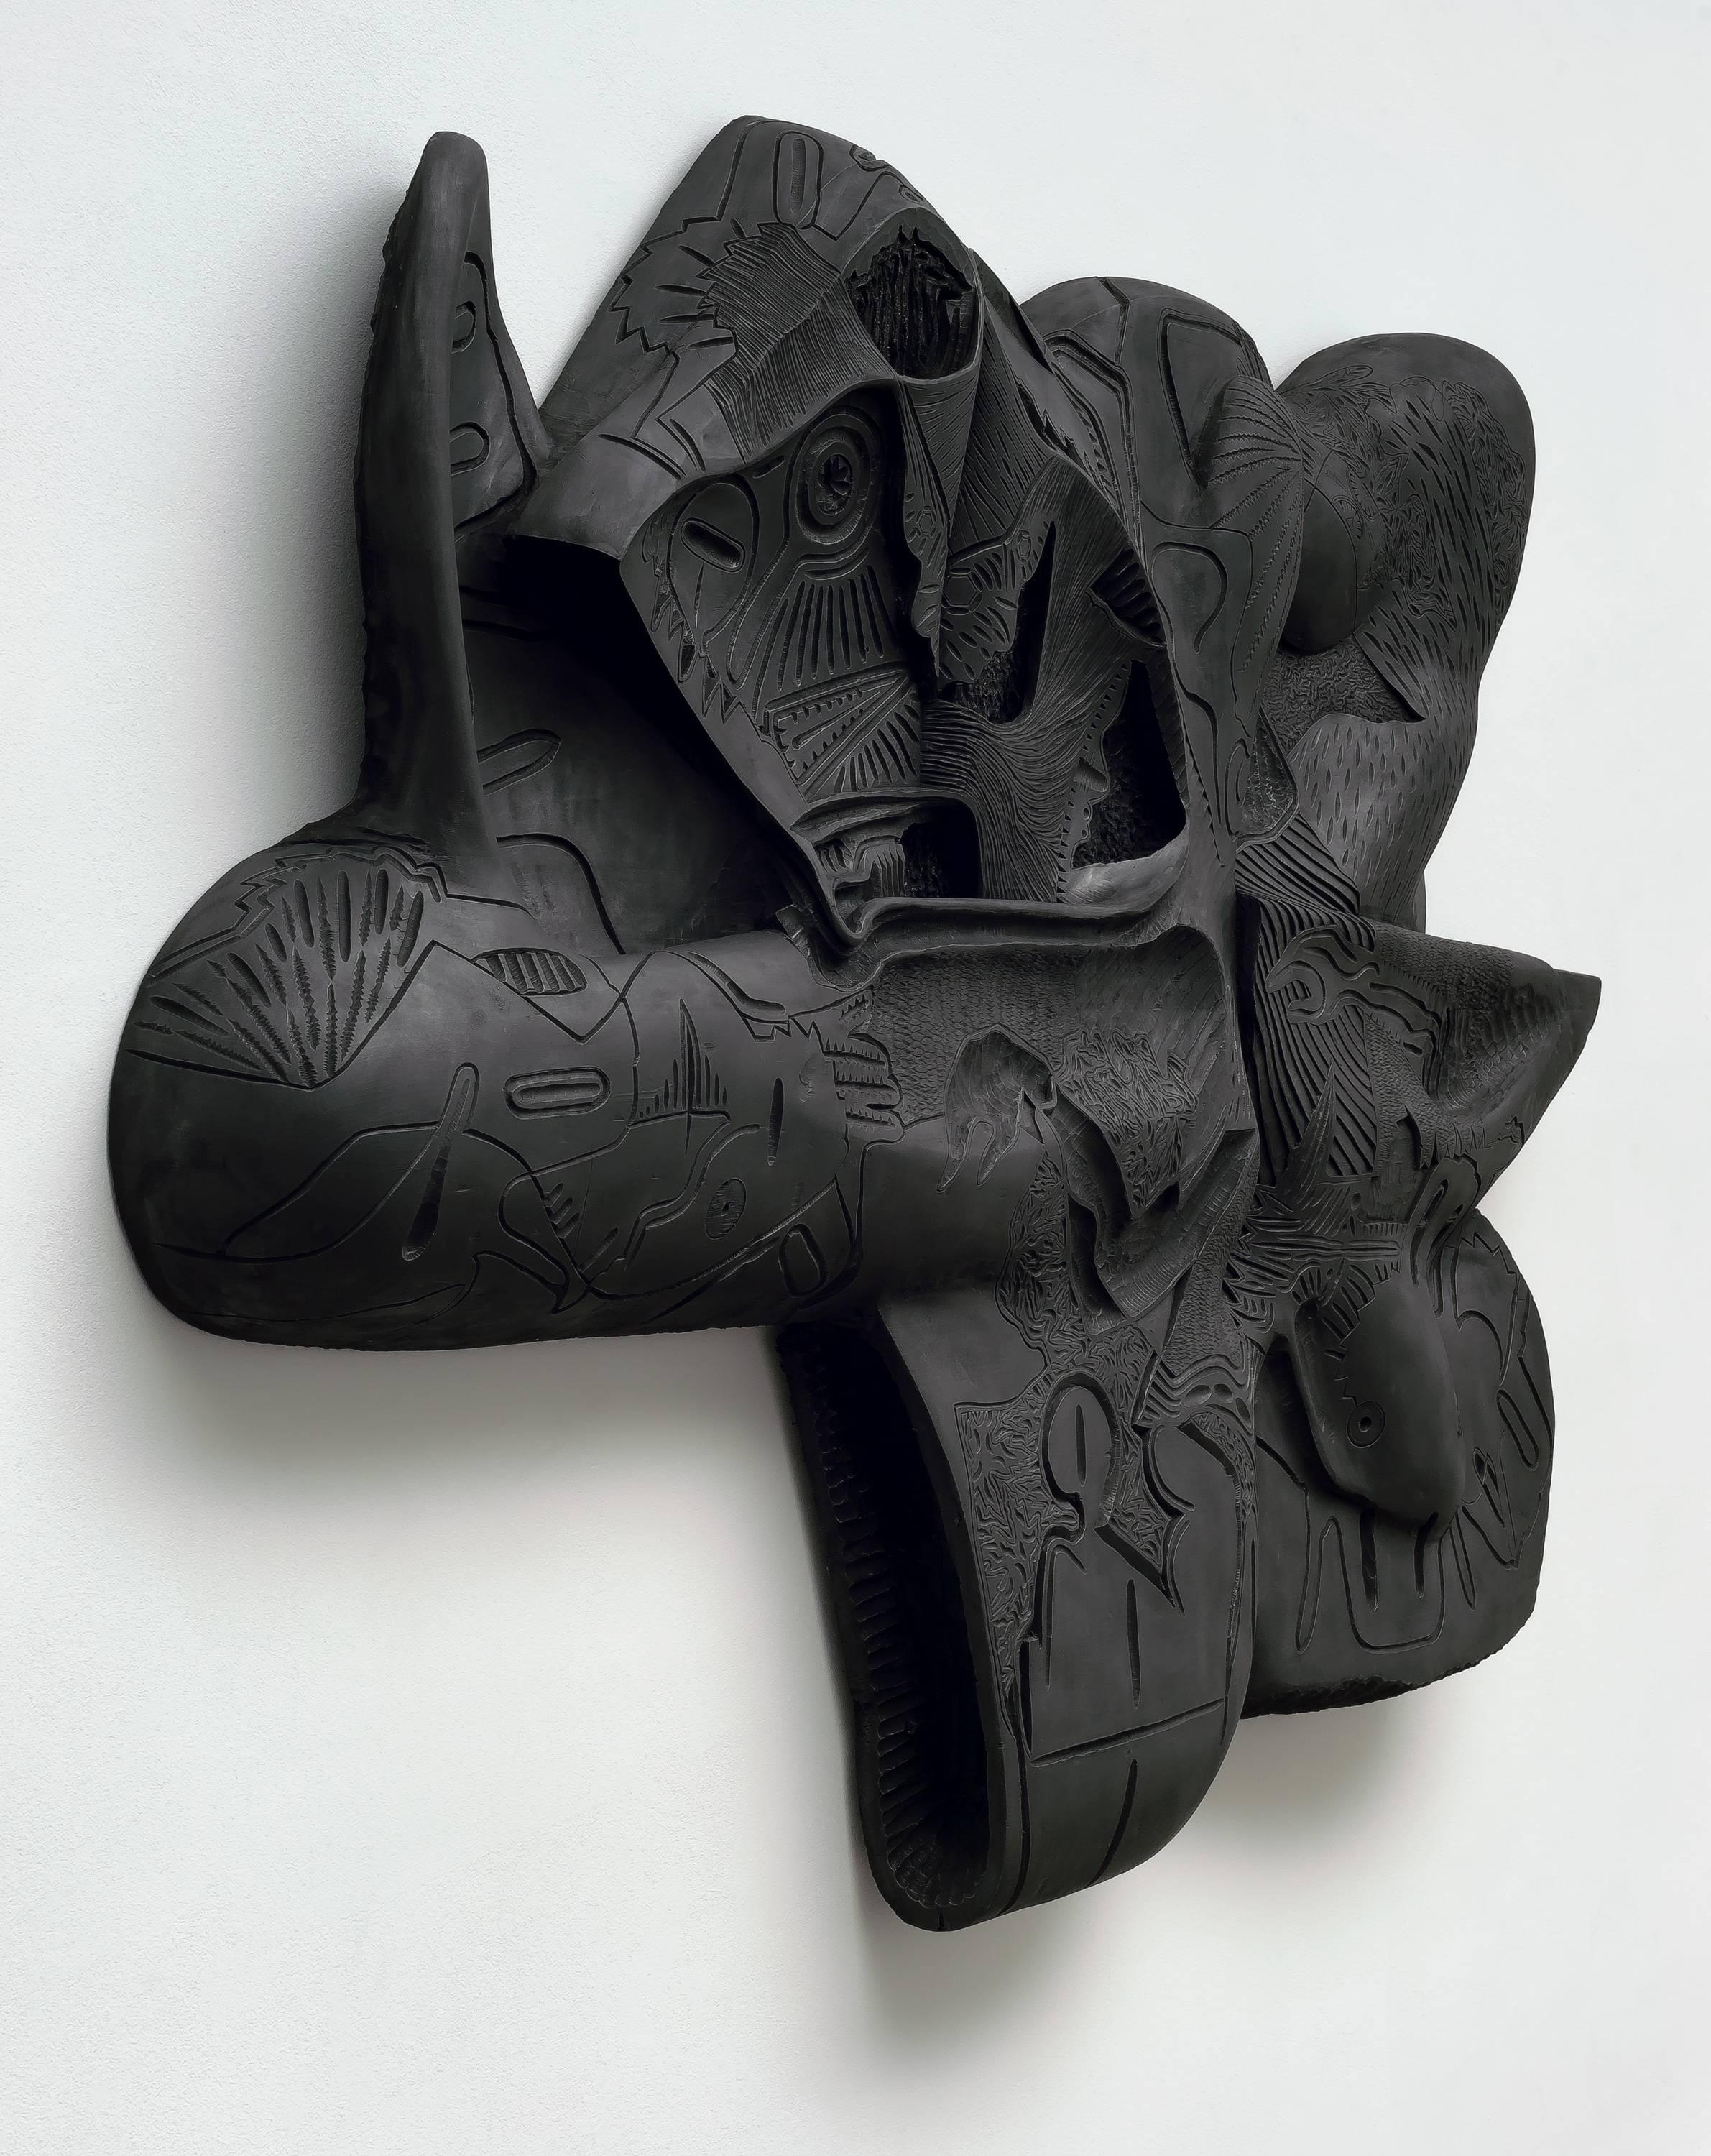 Praying Hands - Sculpture by Aaron Spangler